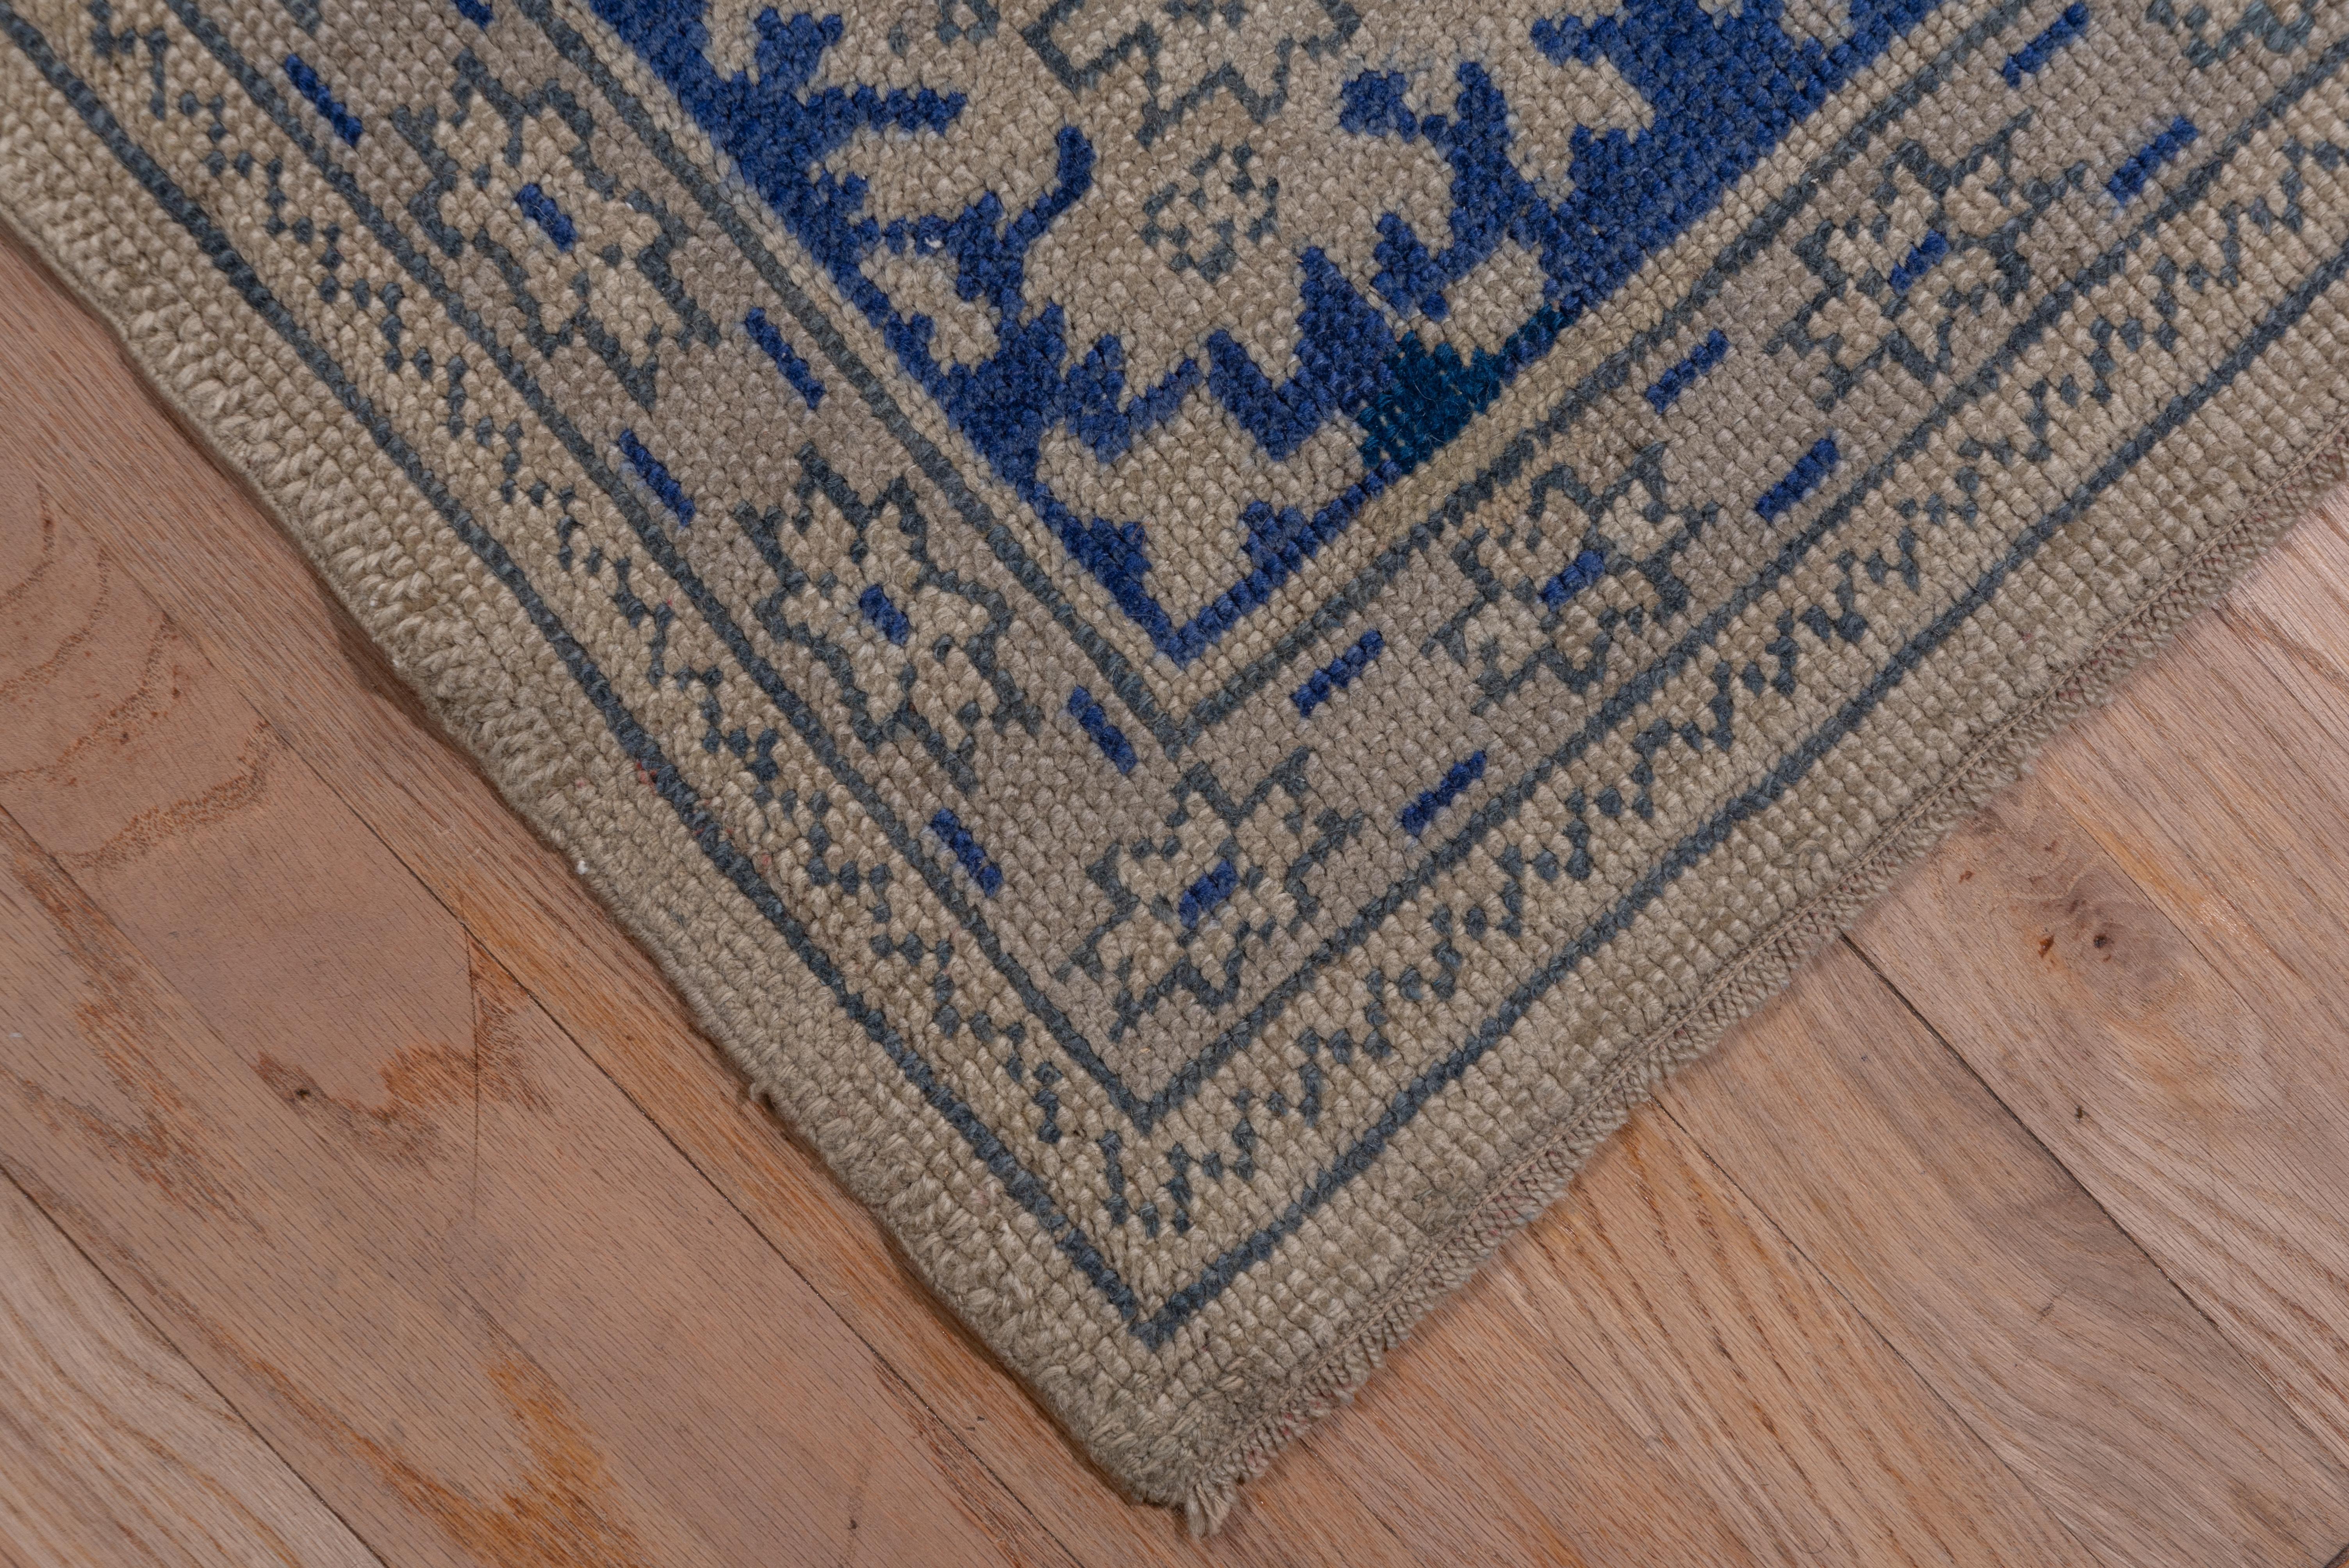 Turkish Royal Blue Bordered Antique Oushak Carpet For Sale